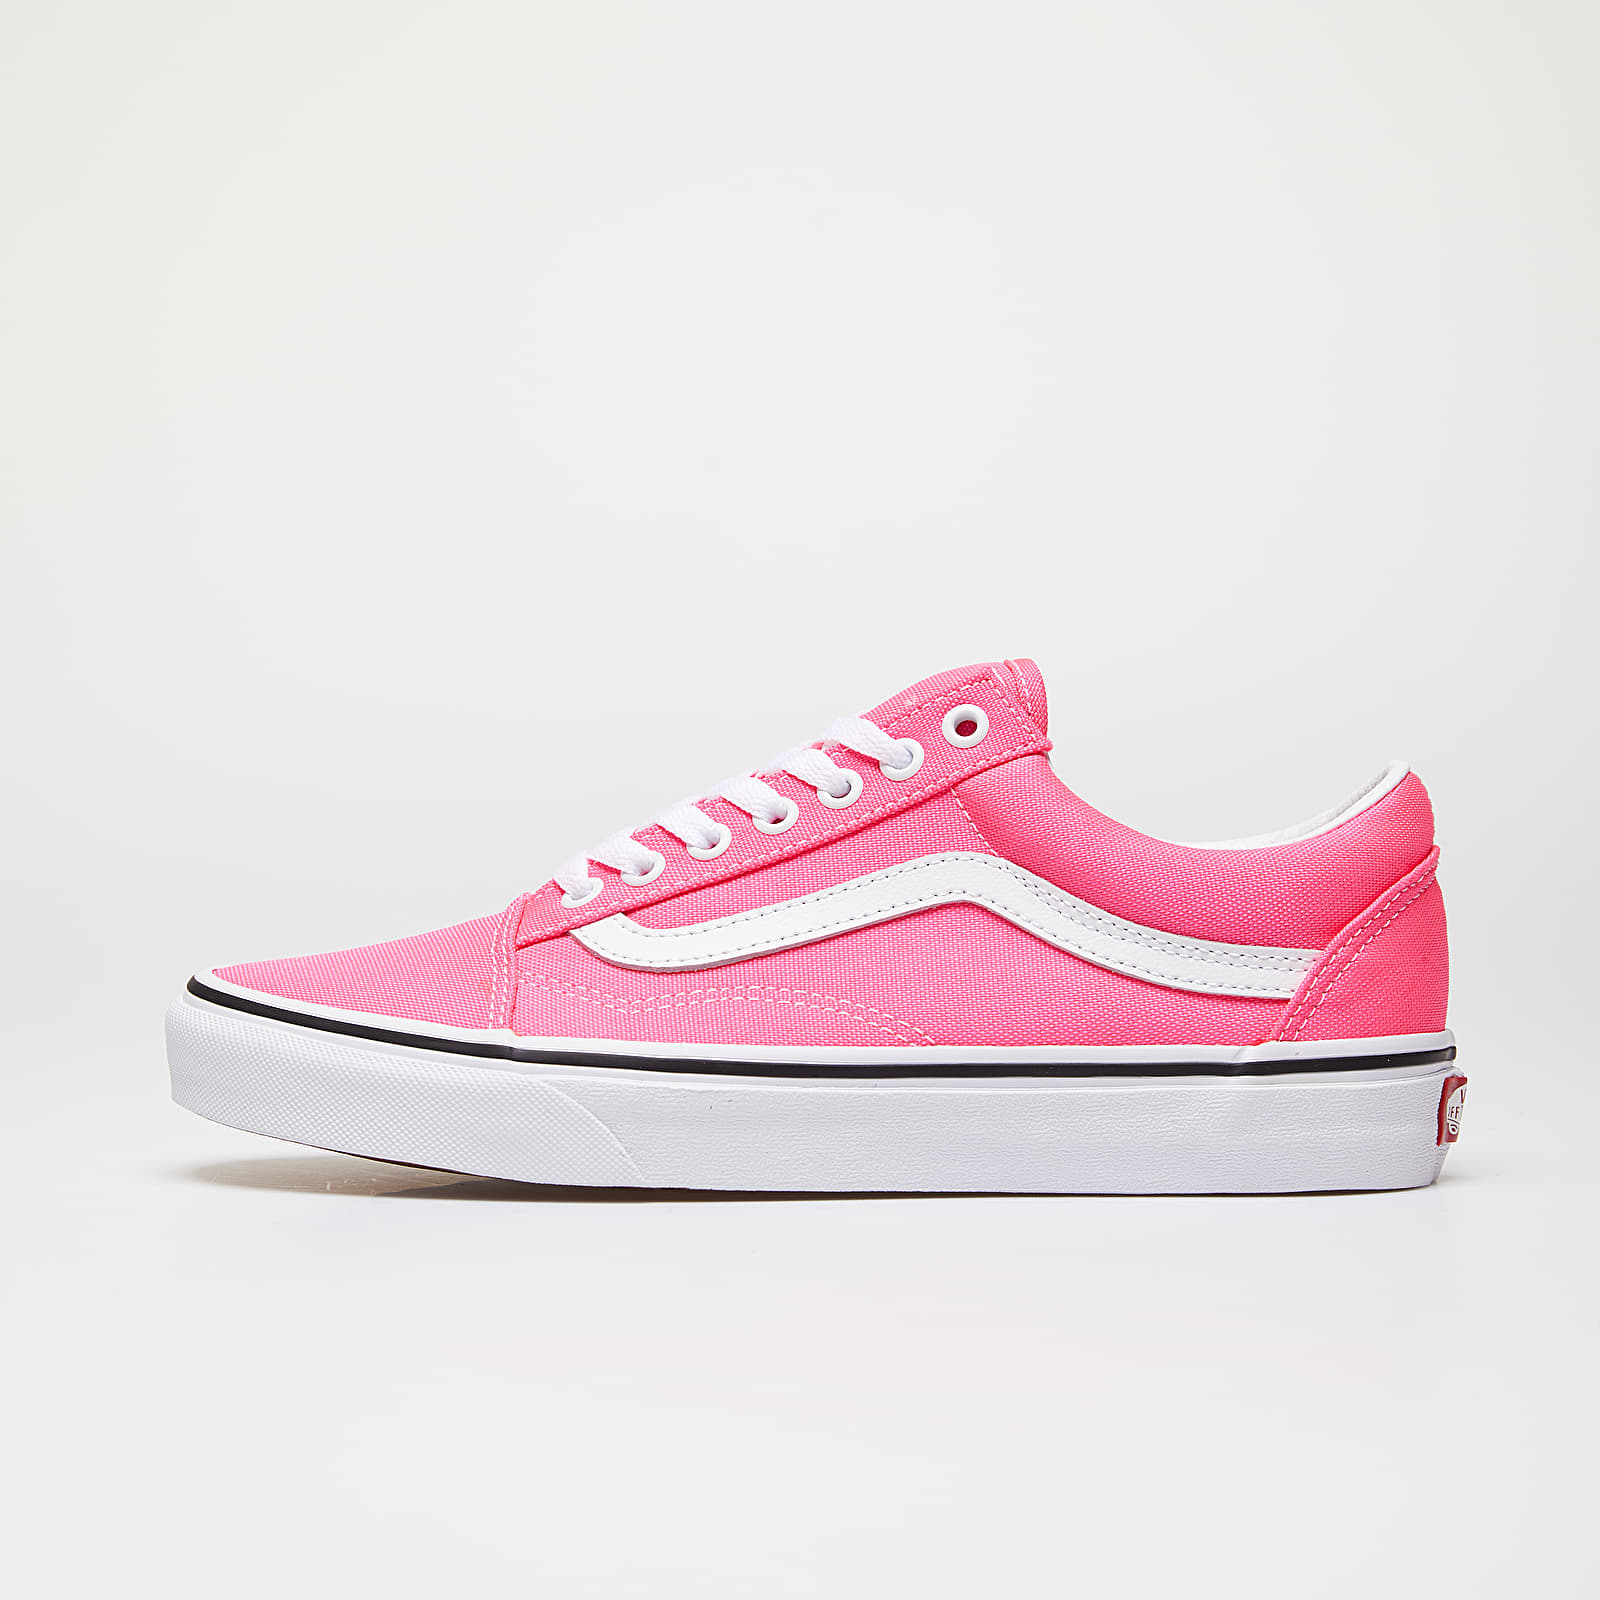 Chaussures et baskets homme Vans Old Skool (Neon) Knockout Pink/ True White